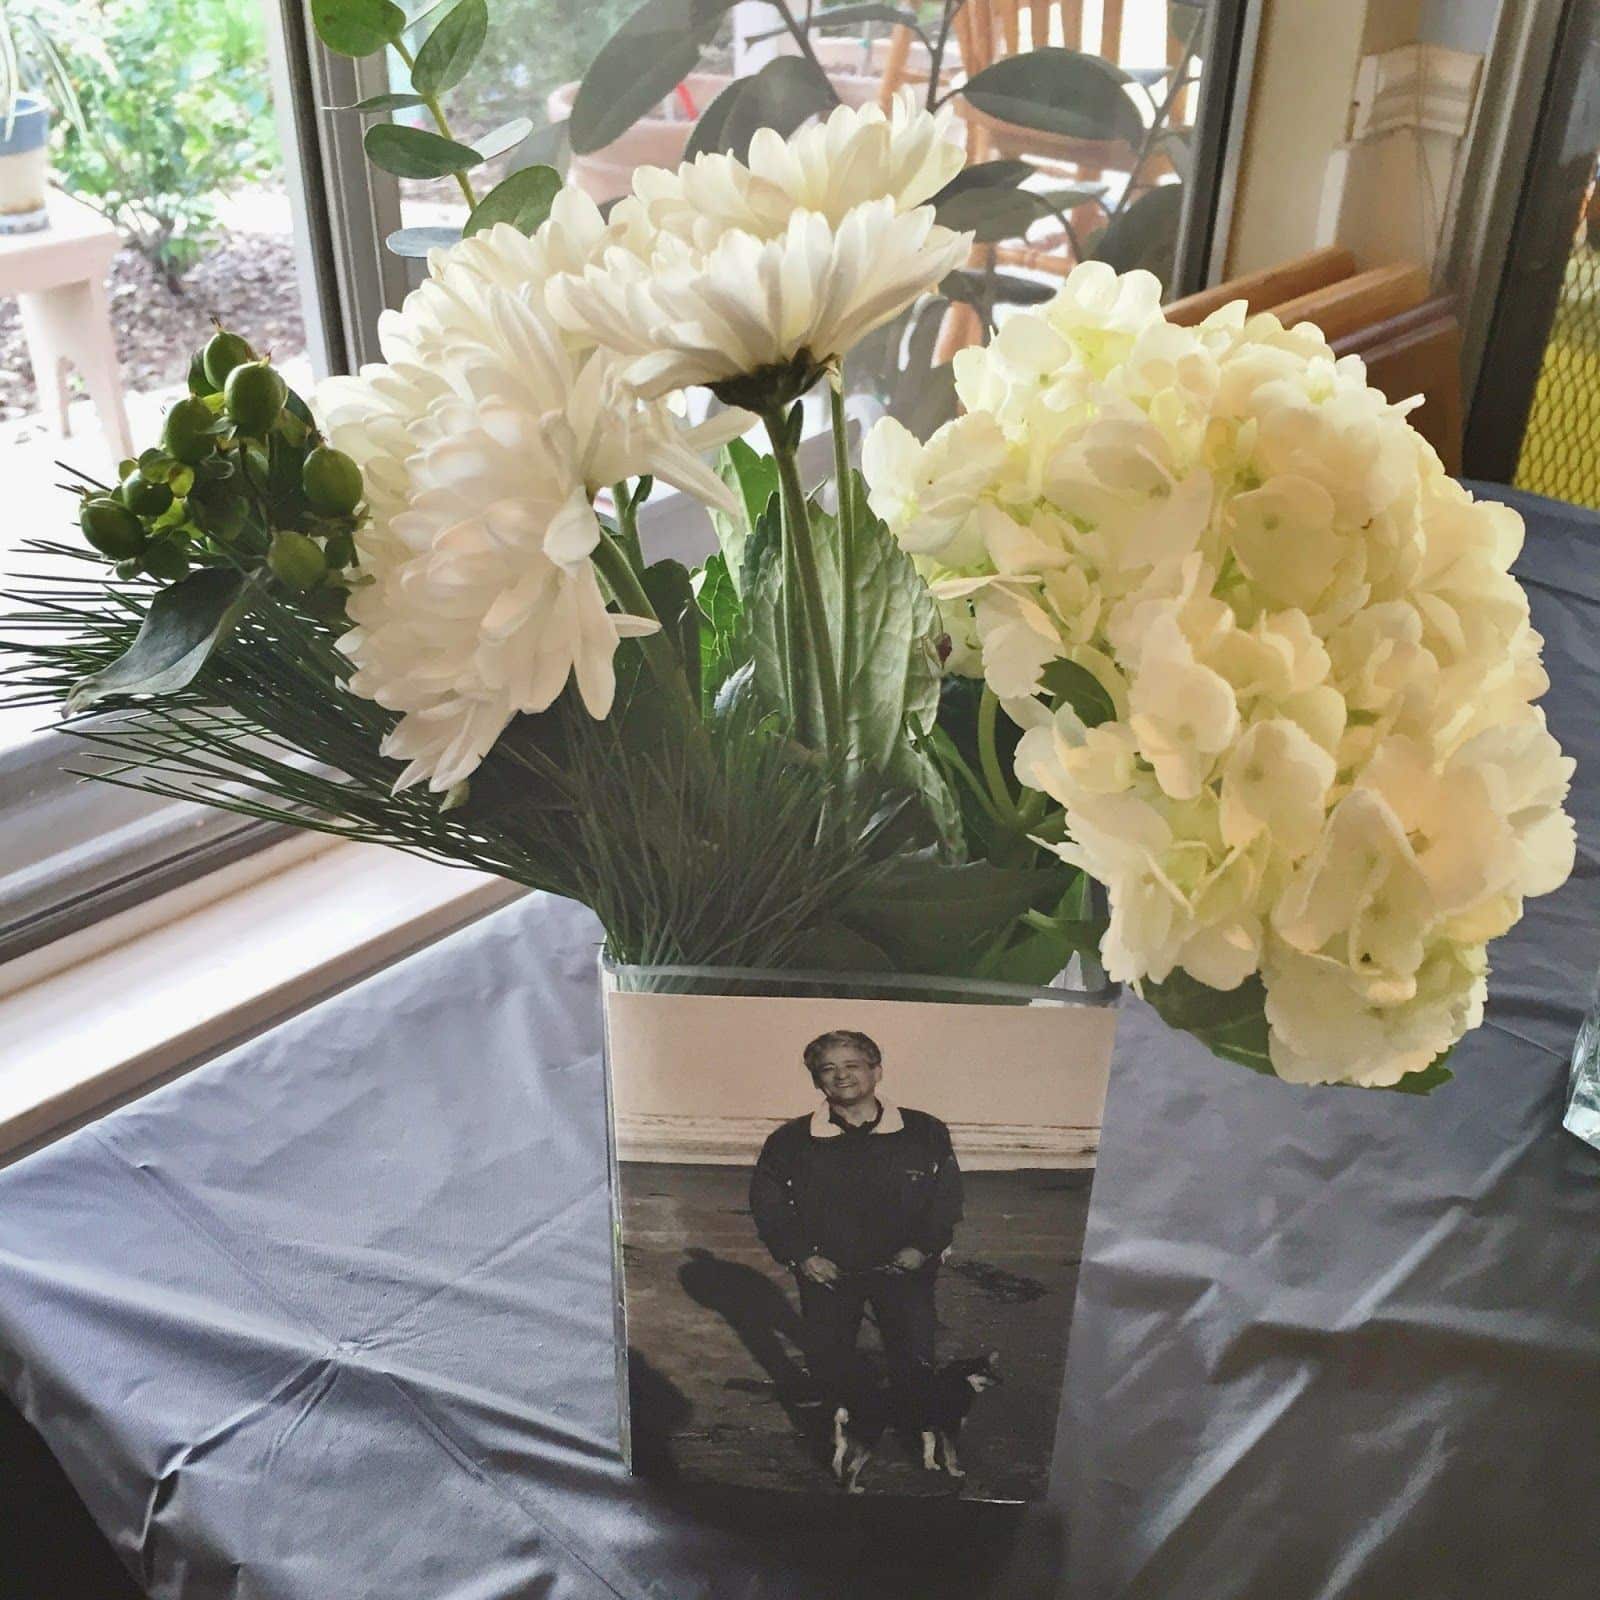 Photo floral arrangement centerpiece from dad